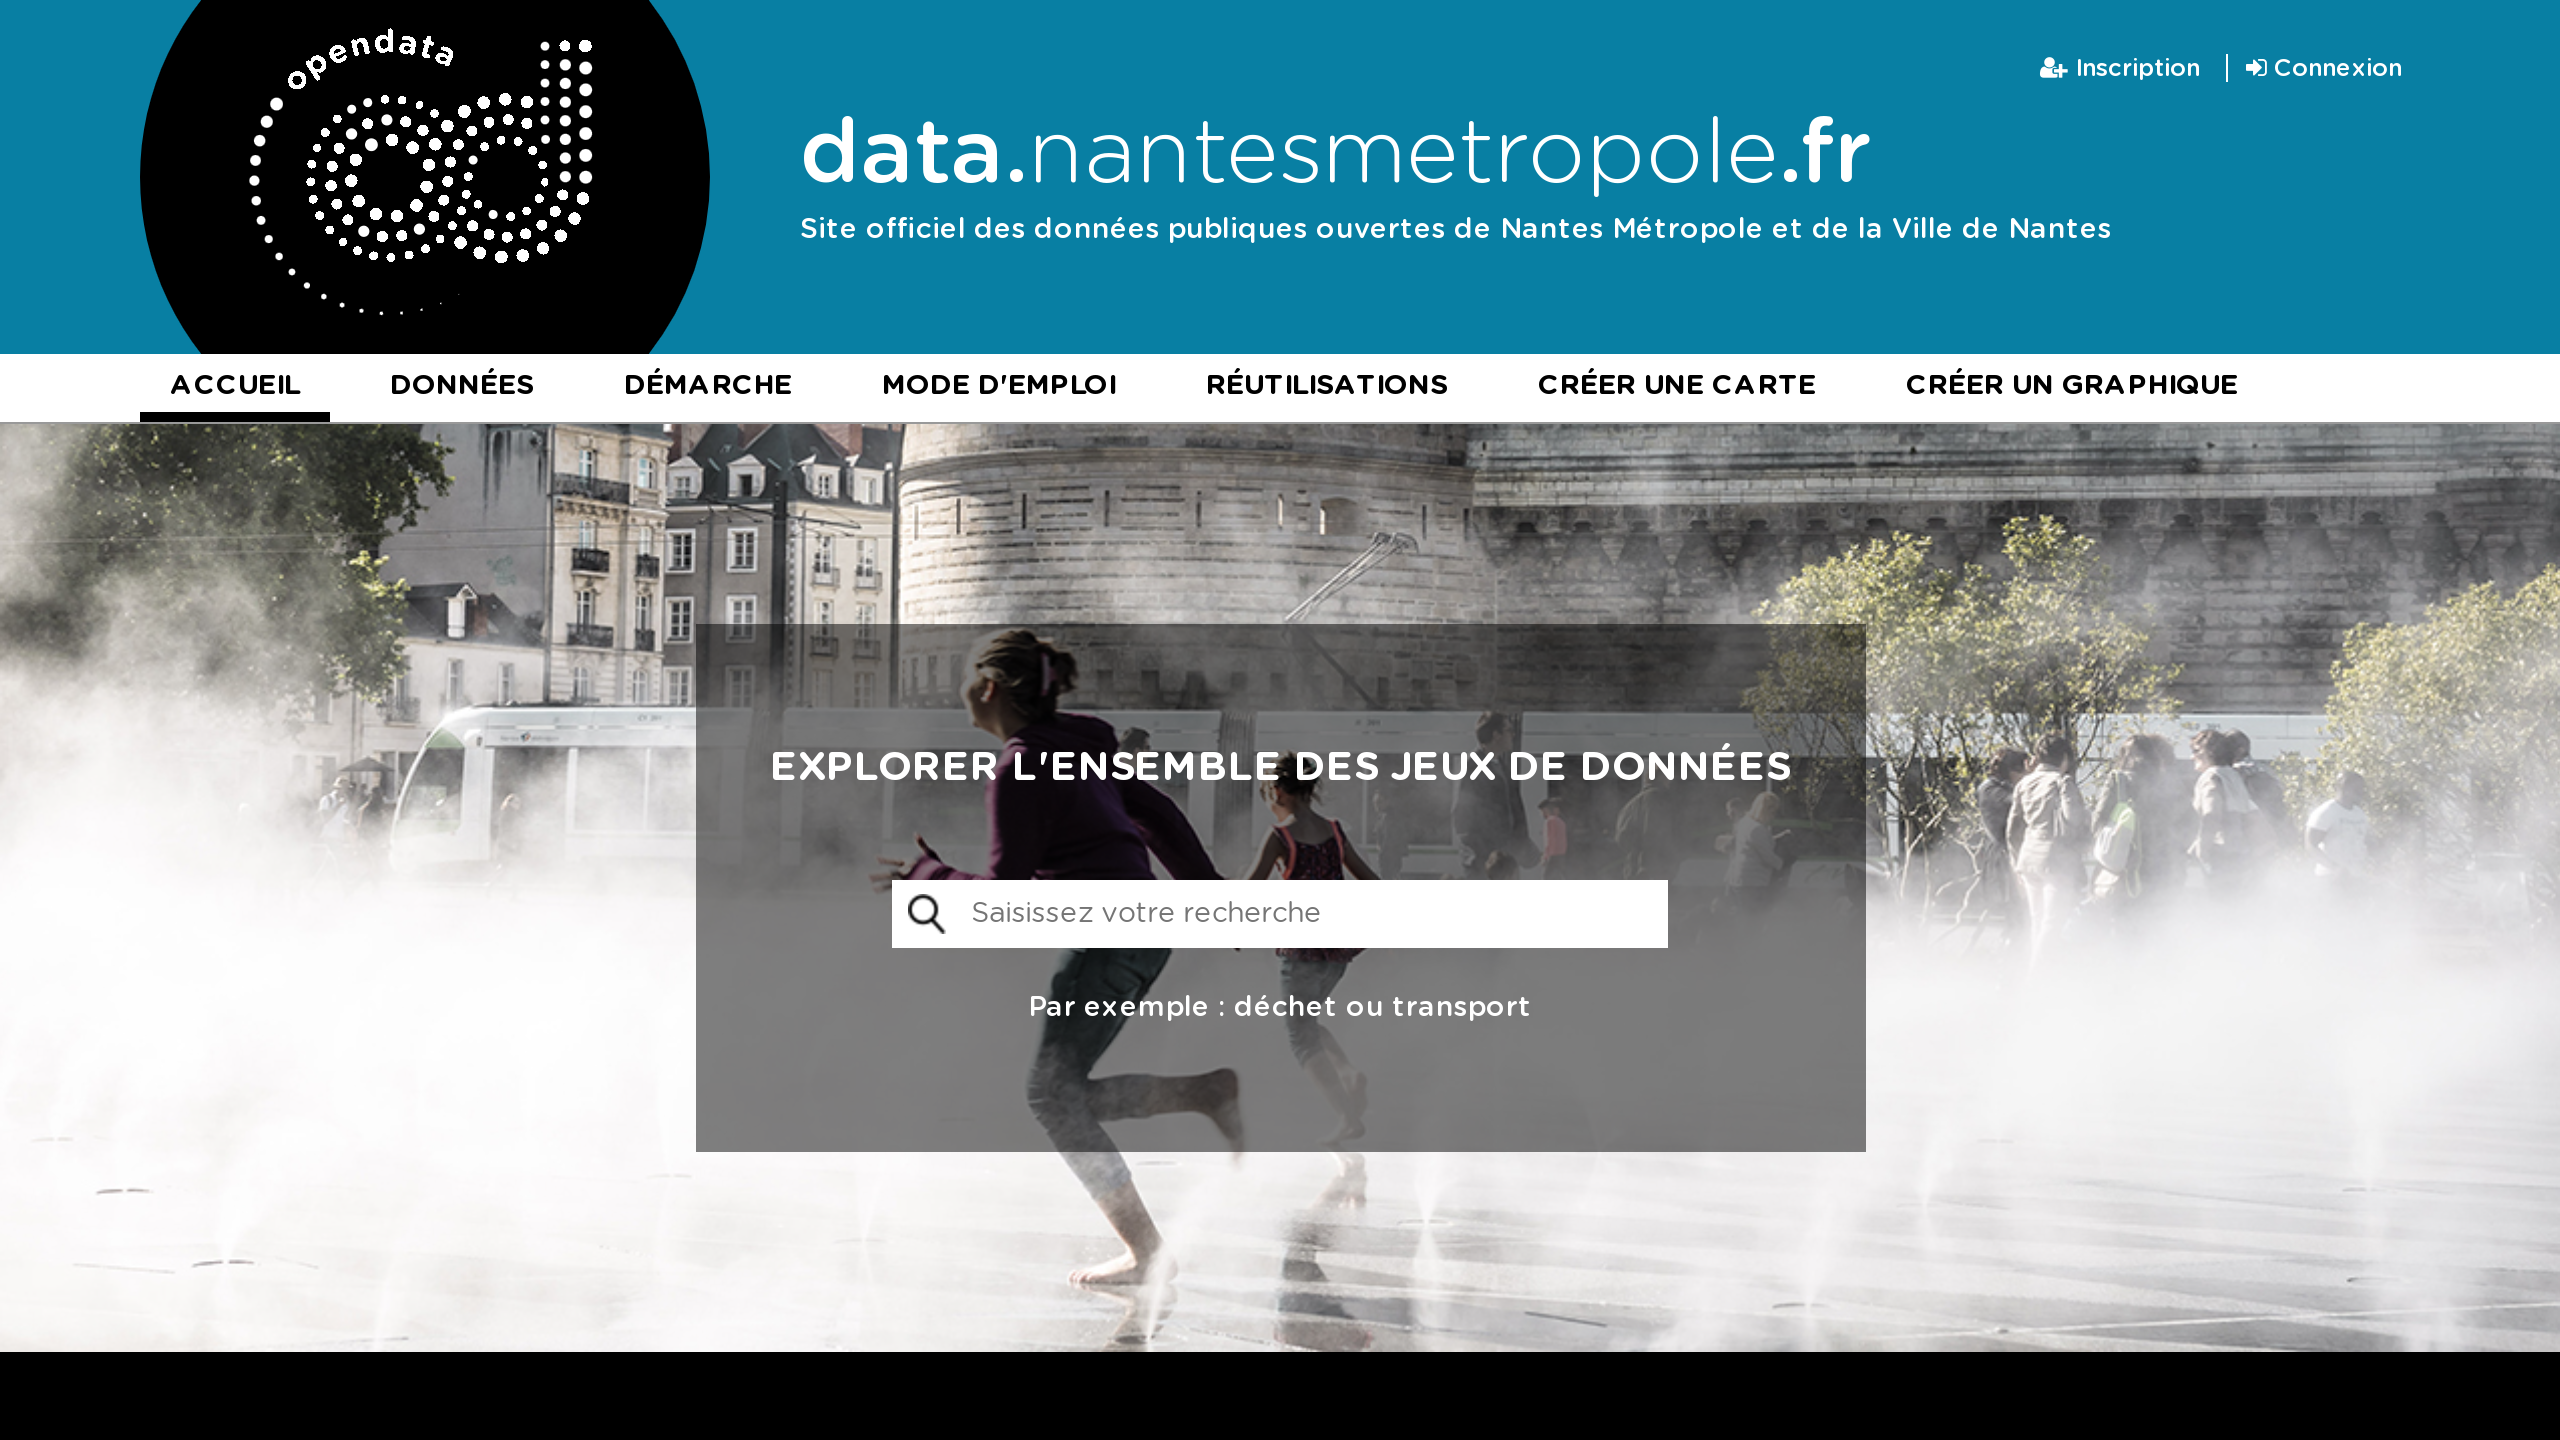 City, Nantes Open Data's website screenshot